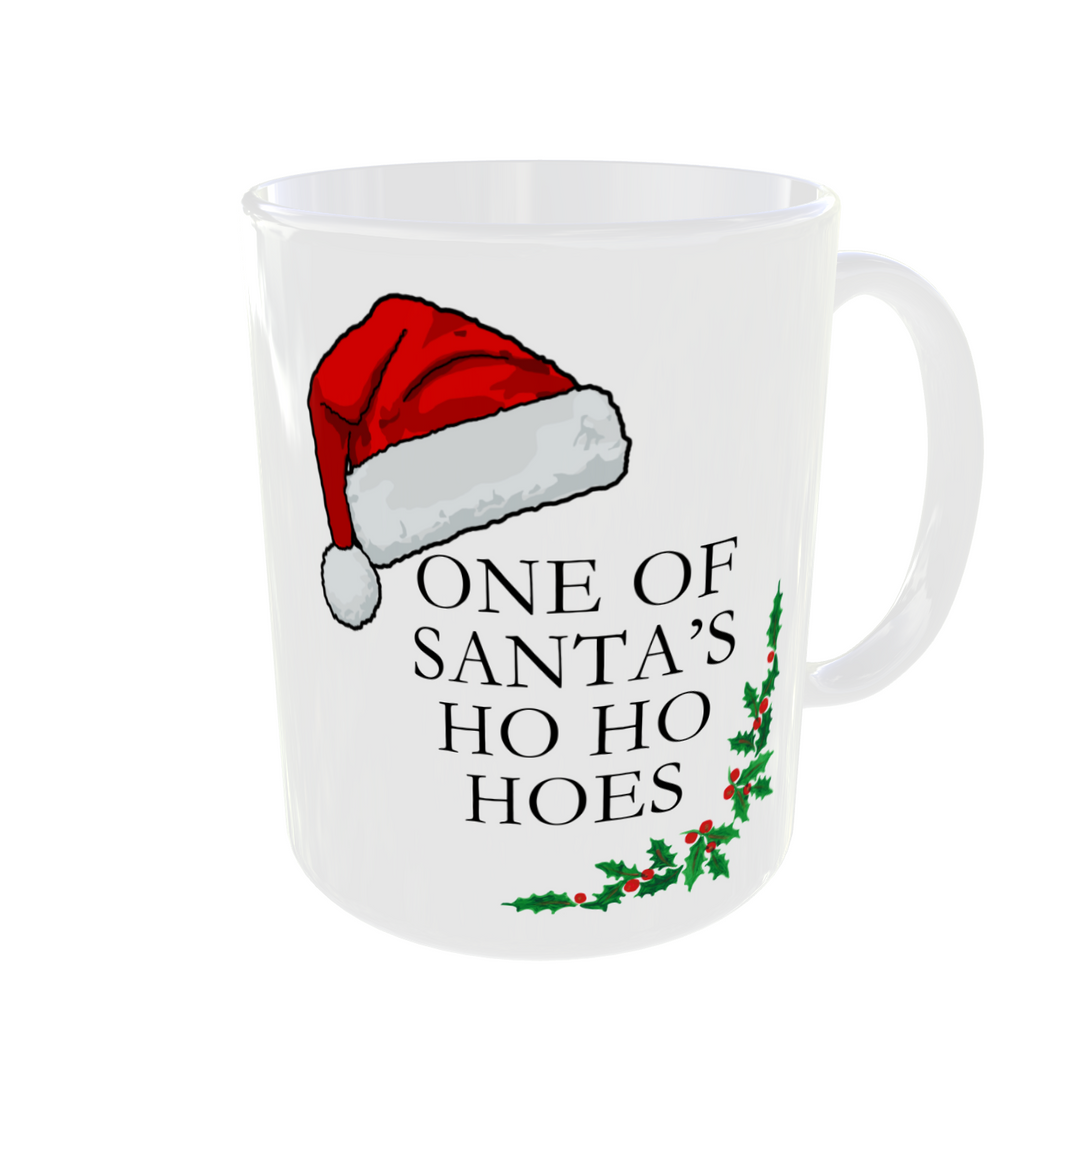 Christmas mug. One of Santa's Ho Ho Hoes is the message with a santa hat and holly on a white mug.